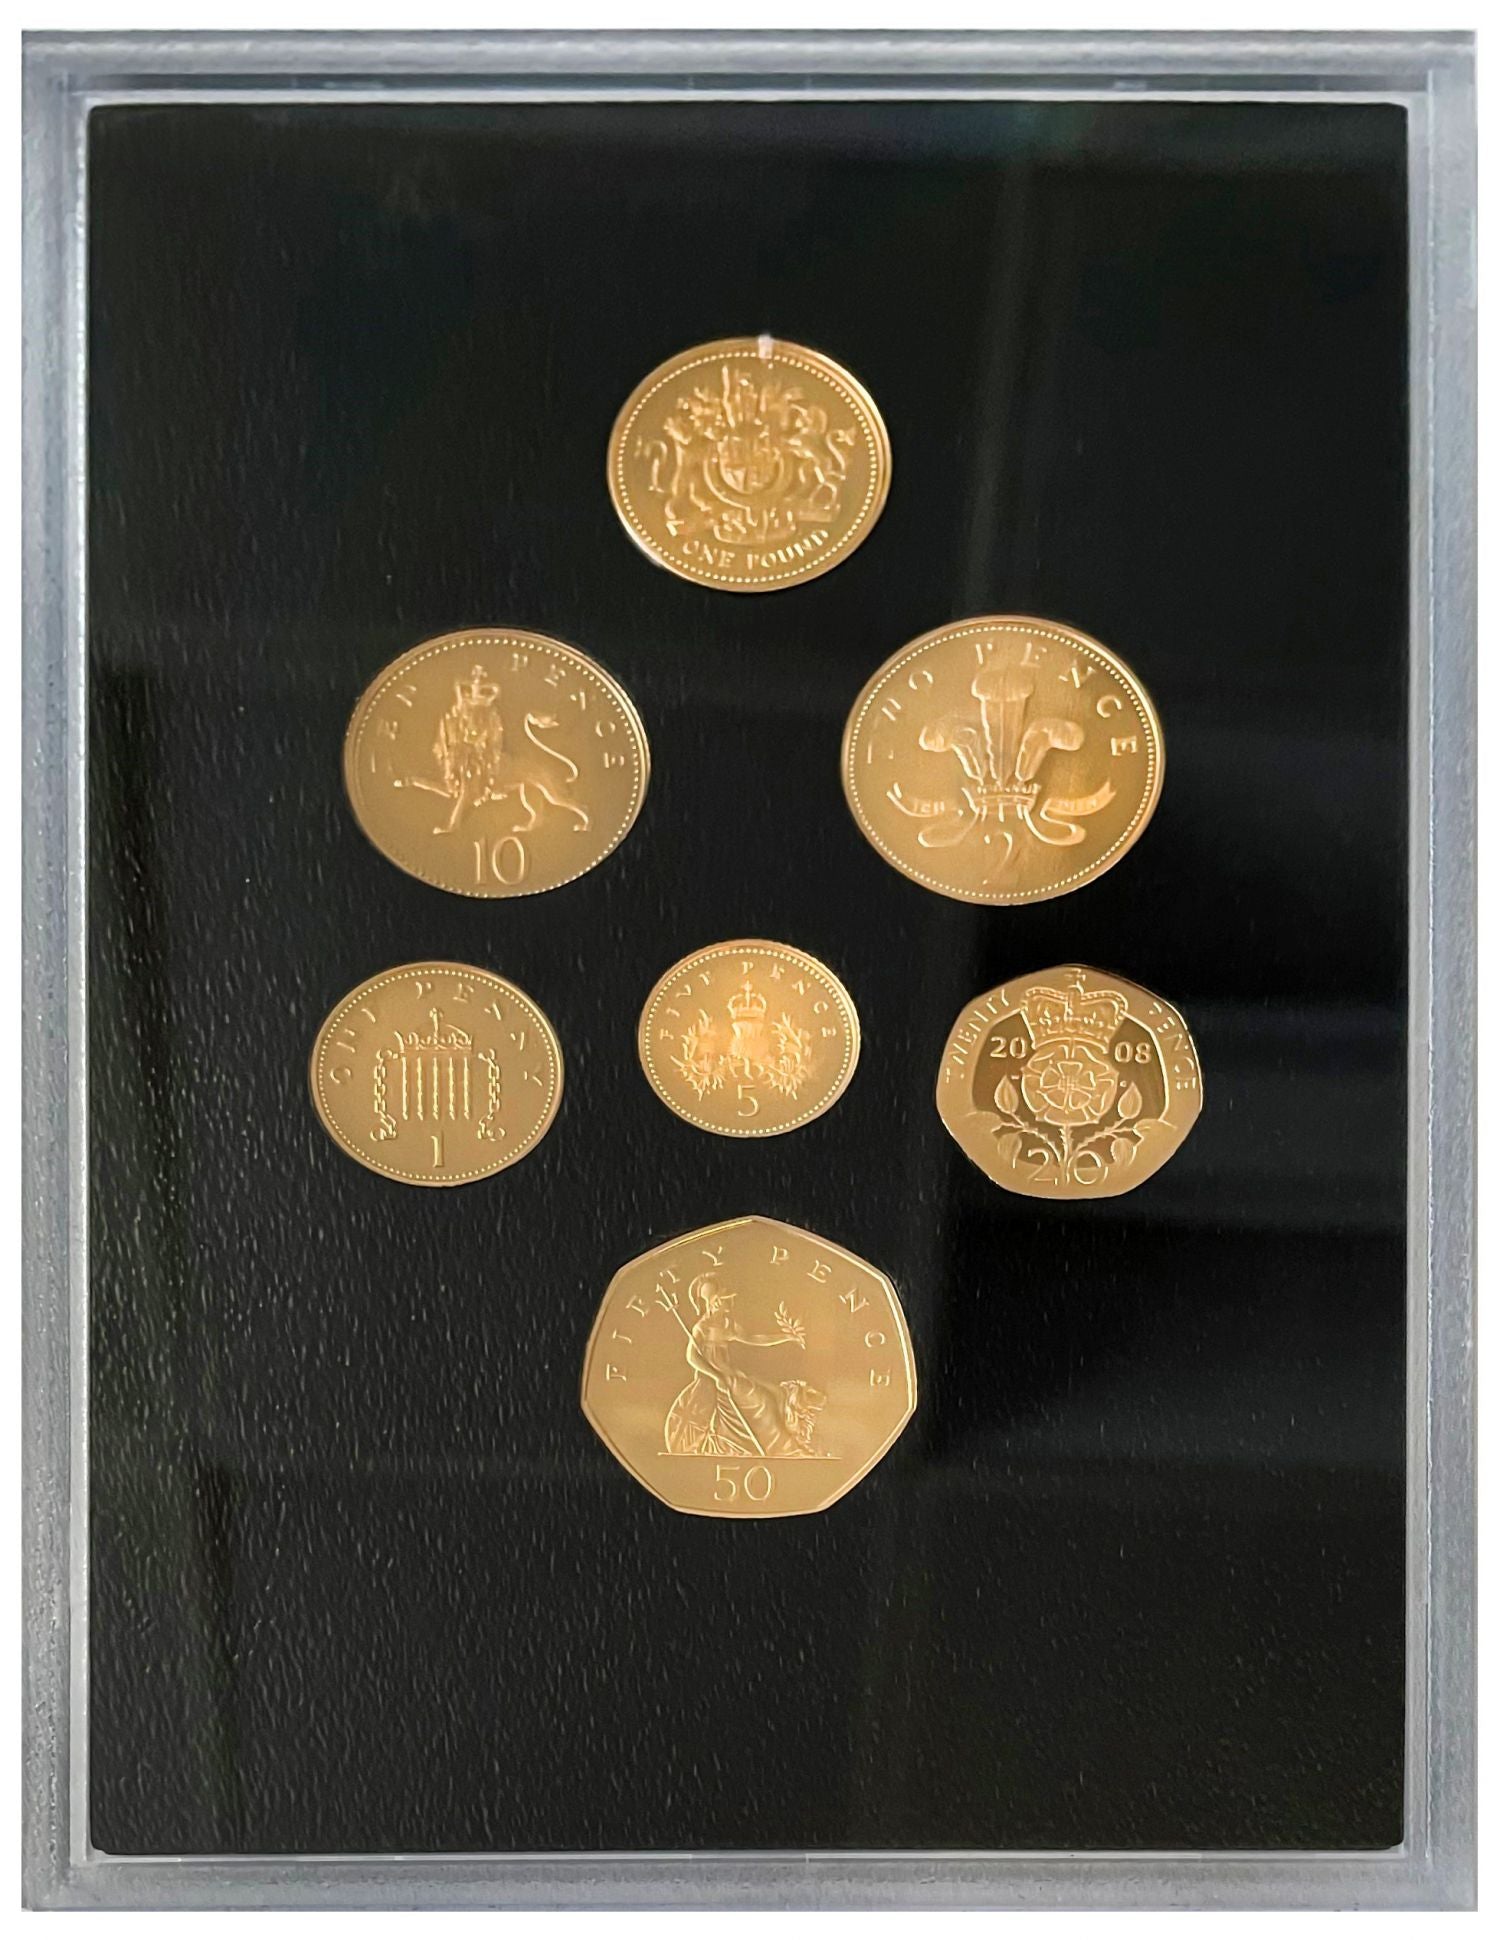 Elizabeth II 2008 7-coin proof Set Emblems of Britain